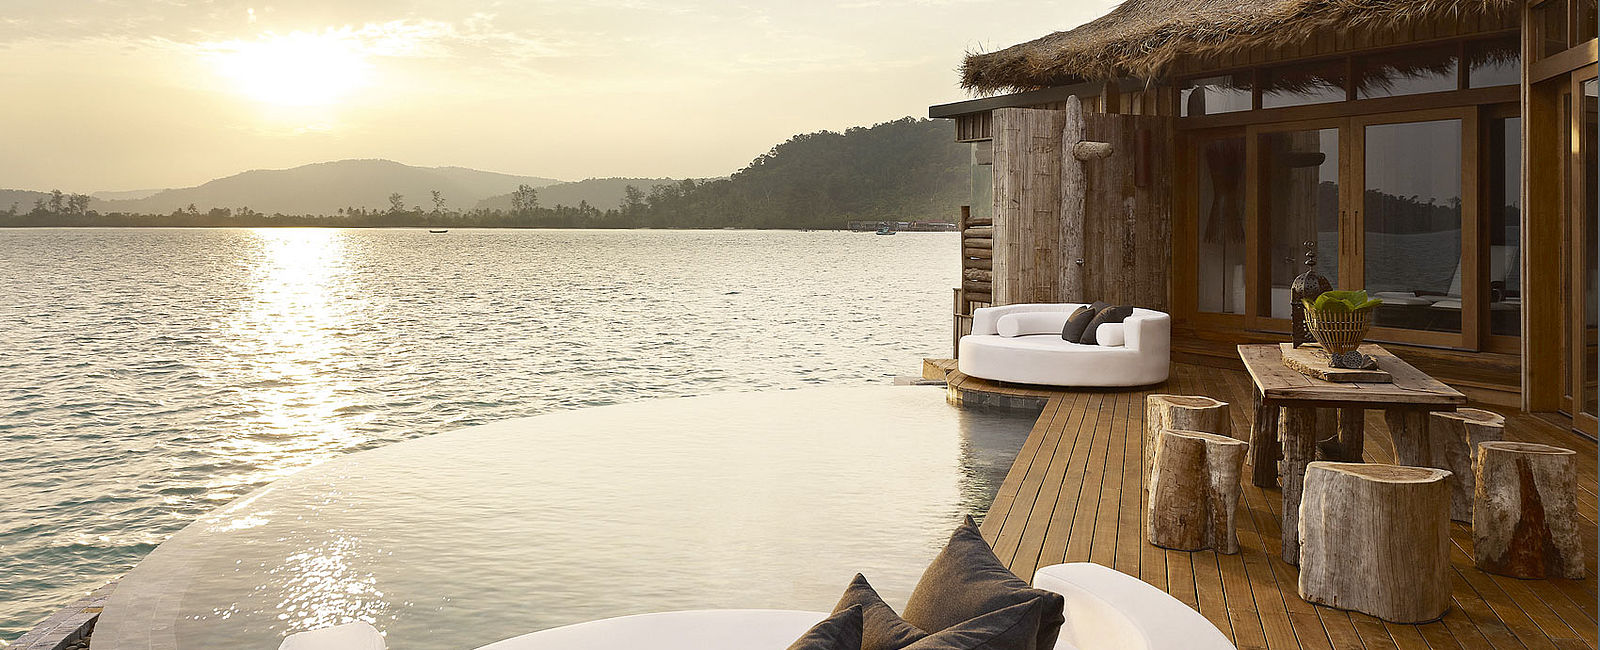 VERY SPECIAL HOTEL
 Resort Song Saa Private Island 
 Wo Luxus und Natur Hand in Hand gehen 